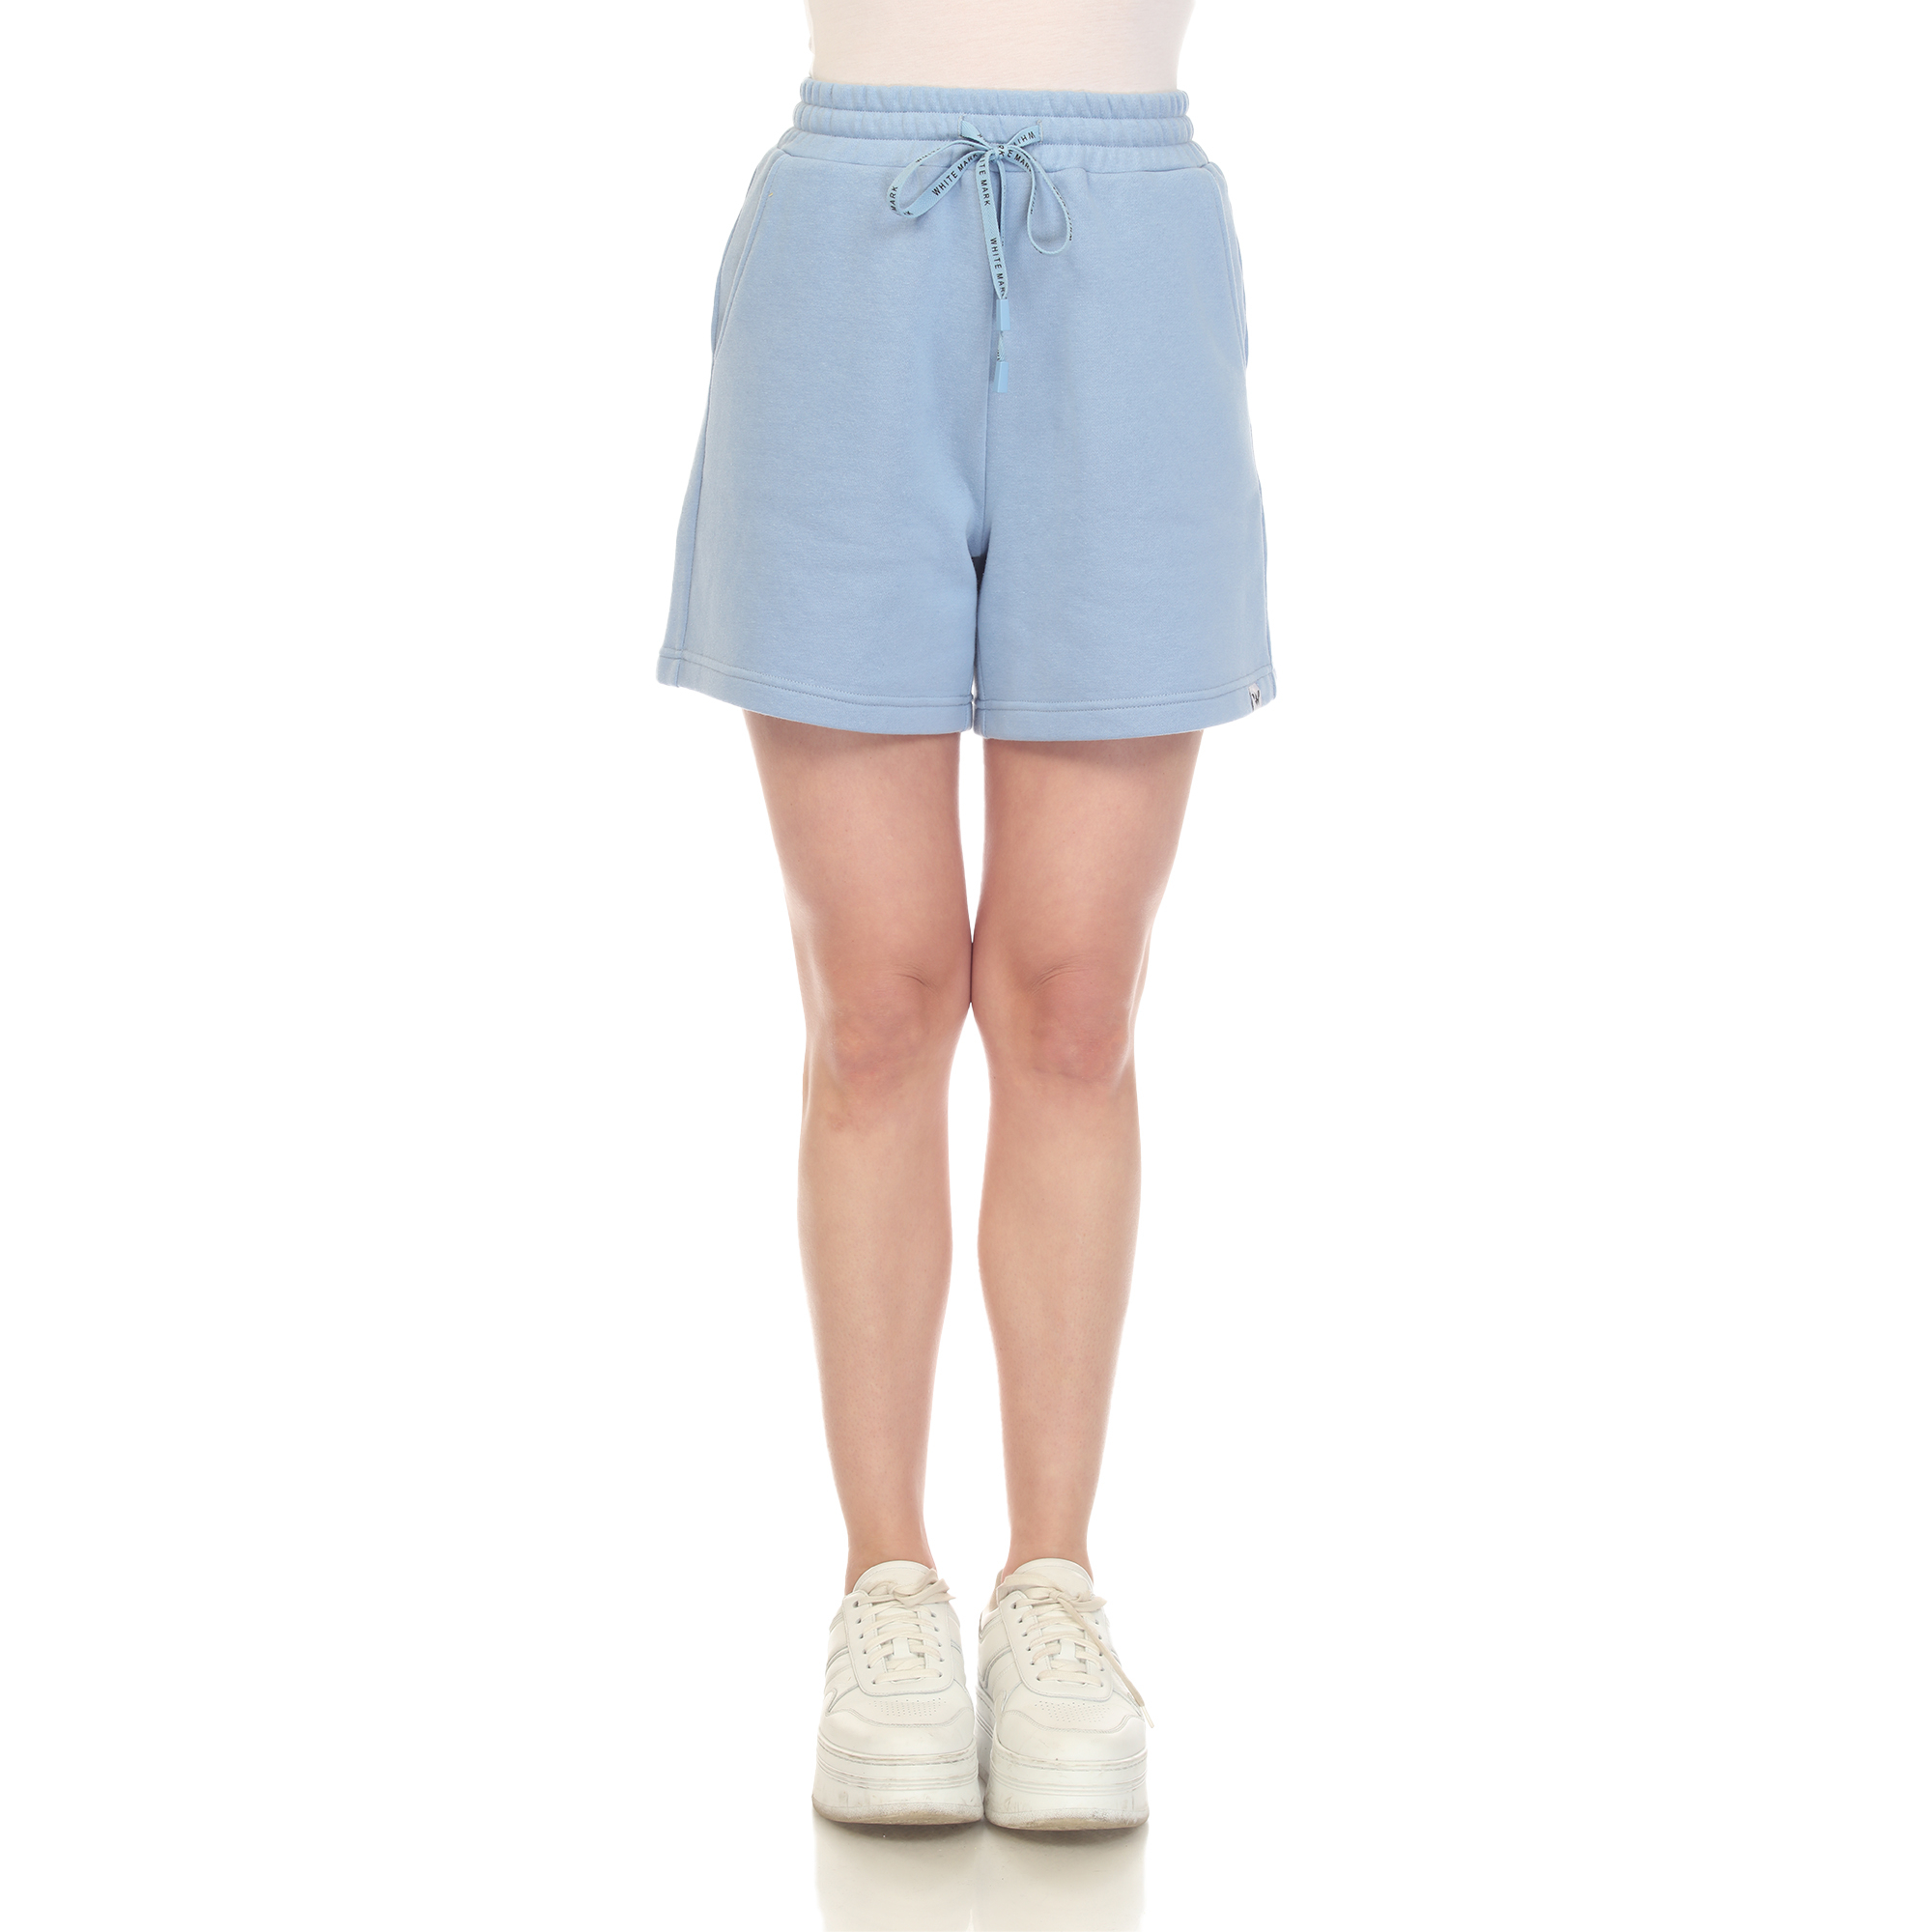 White Mark Women's Super Soft Drawstring Waistband Sweat Shorts - Denim Blue, X-Large